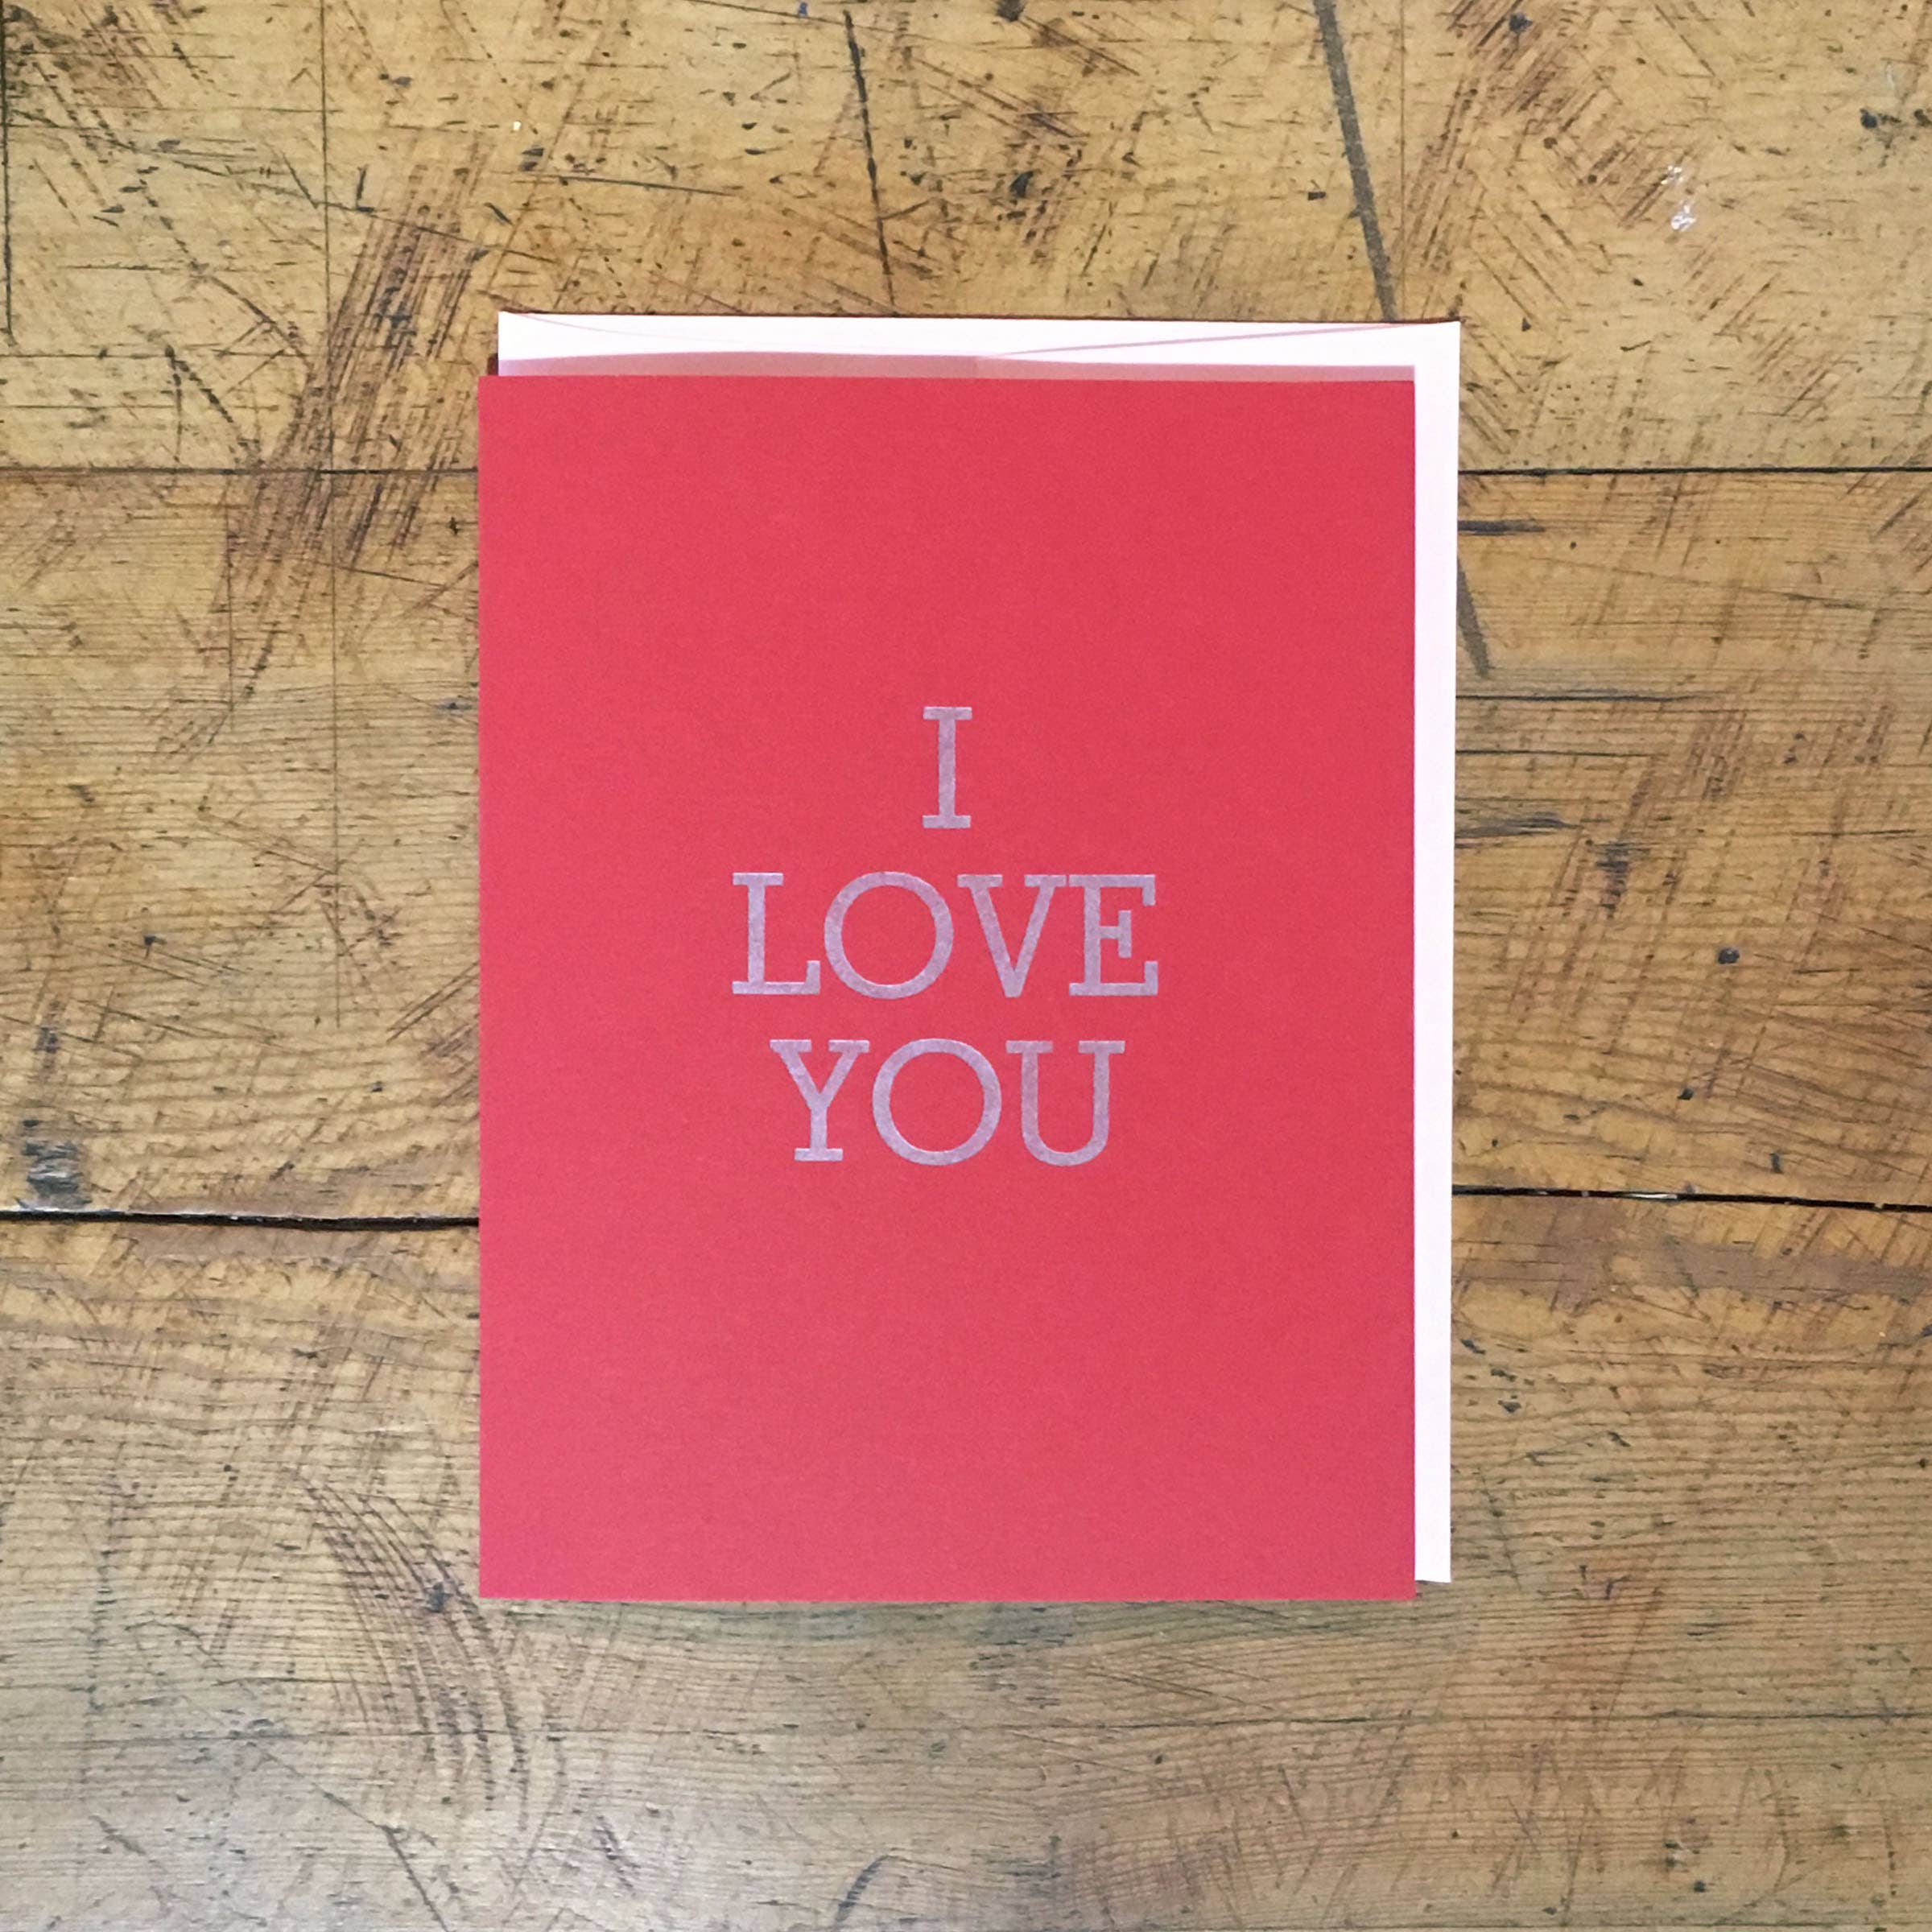 Green Bird Press - I Love You Letterpress Card